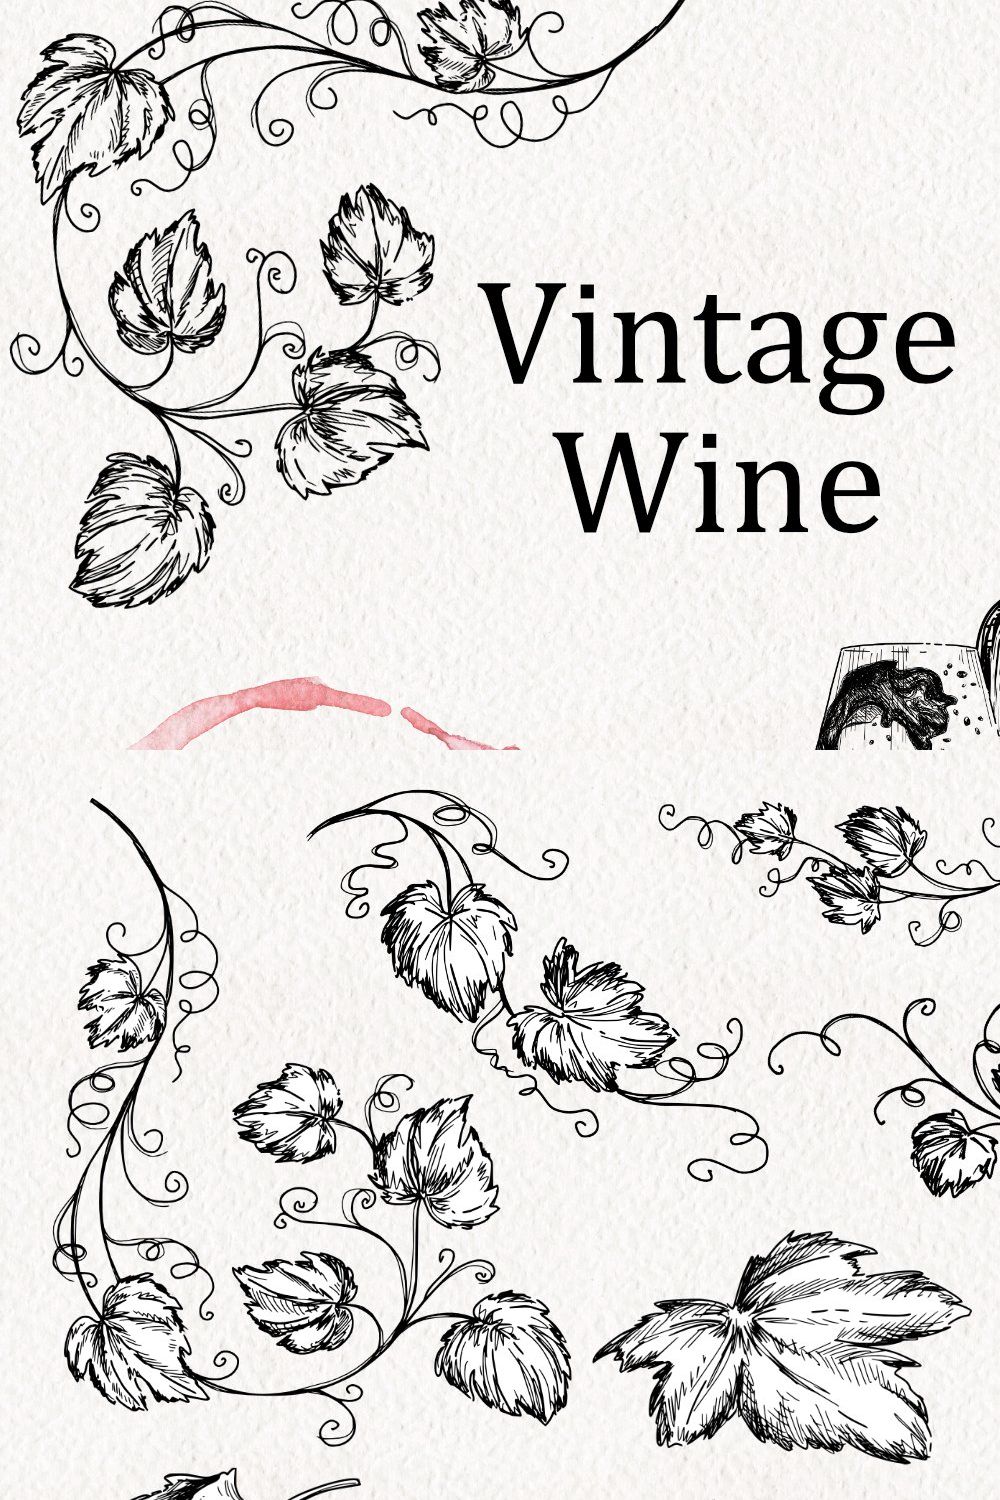 Vintage Wine pinterest preview image.